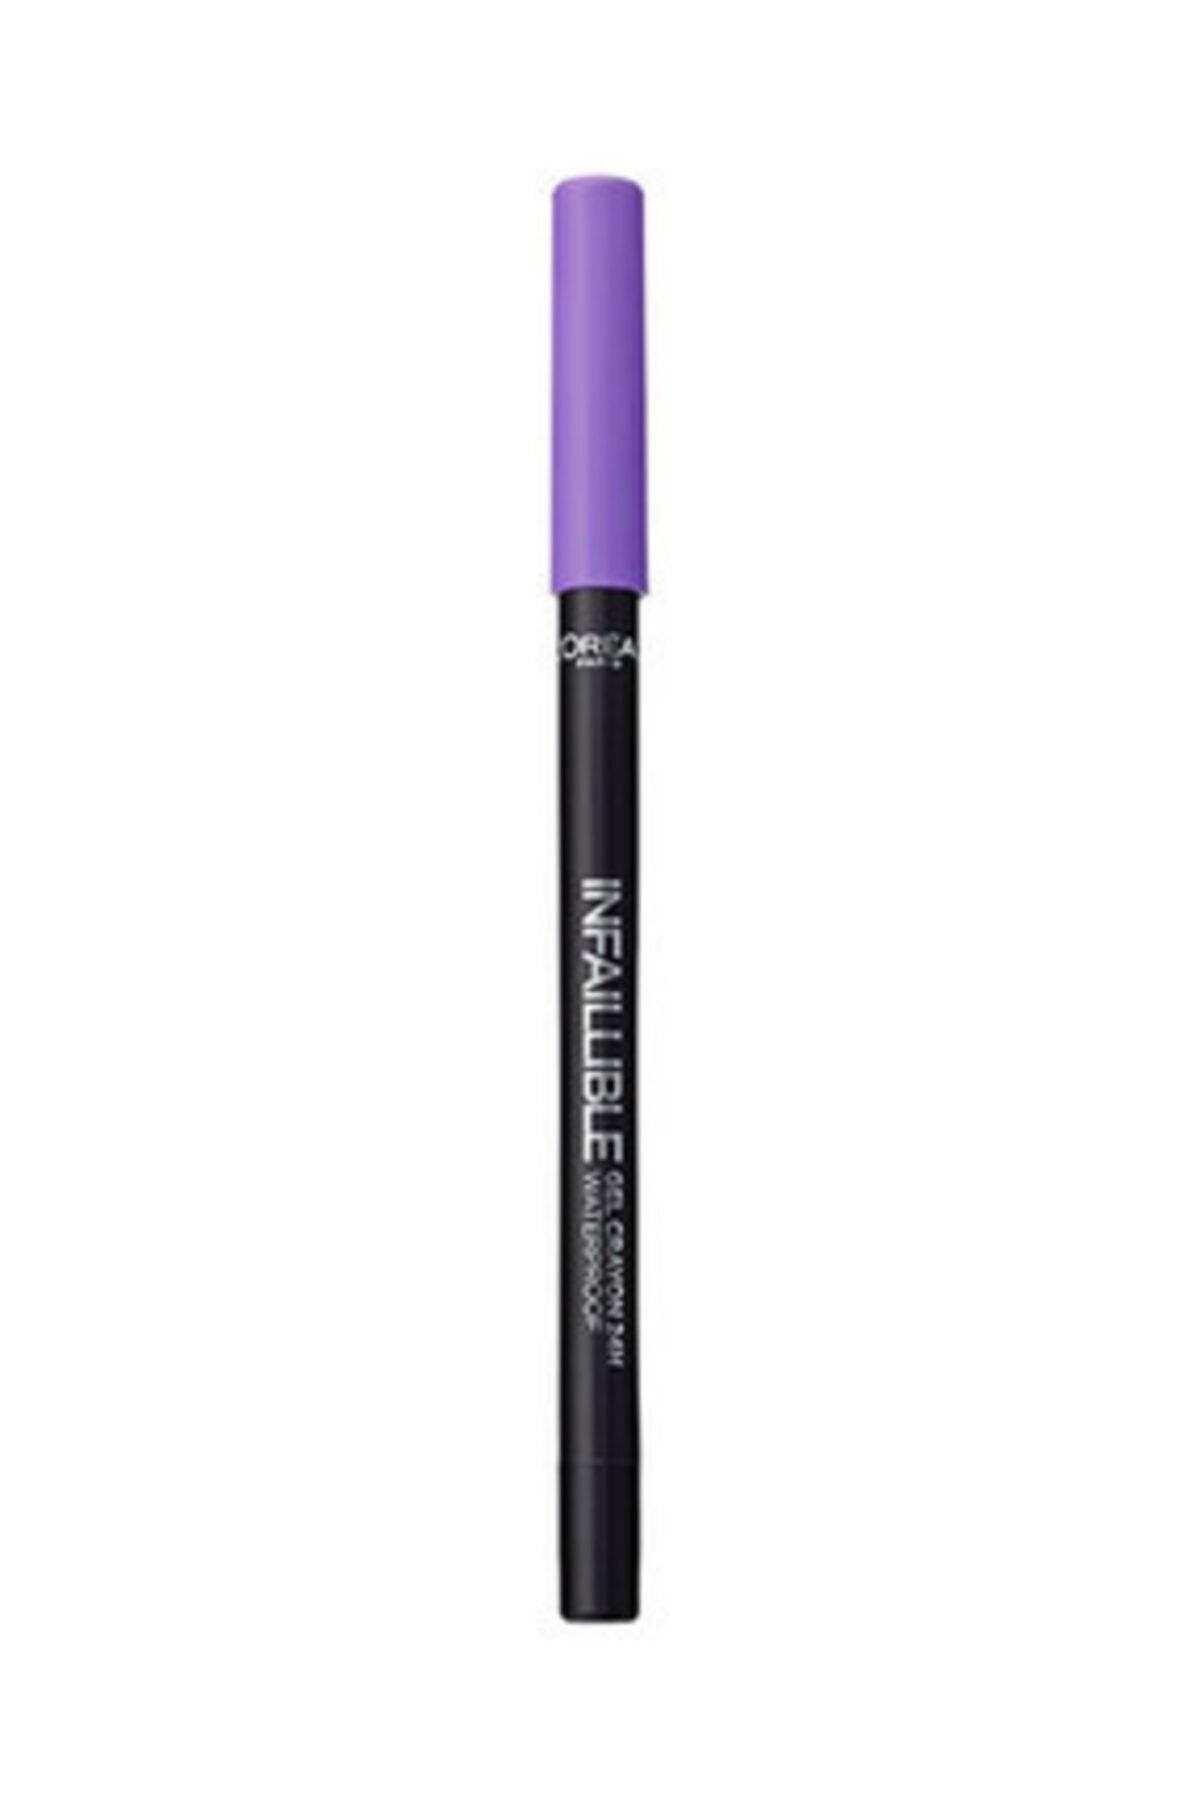 L'Oreal Paris Mor Eyeliner - Infallible Gel Crayon Eyeliner 11 Purple 3600523351596